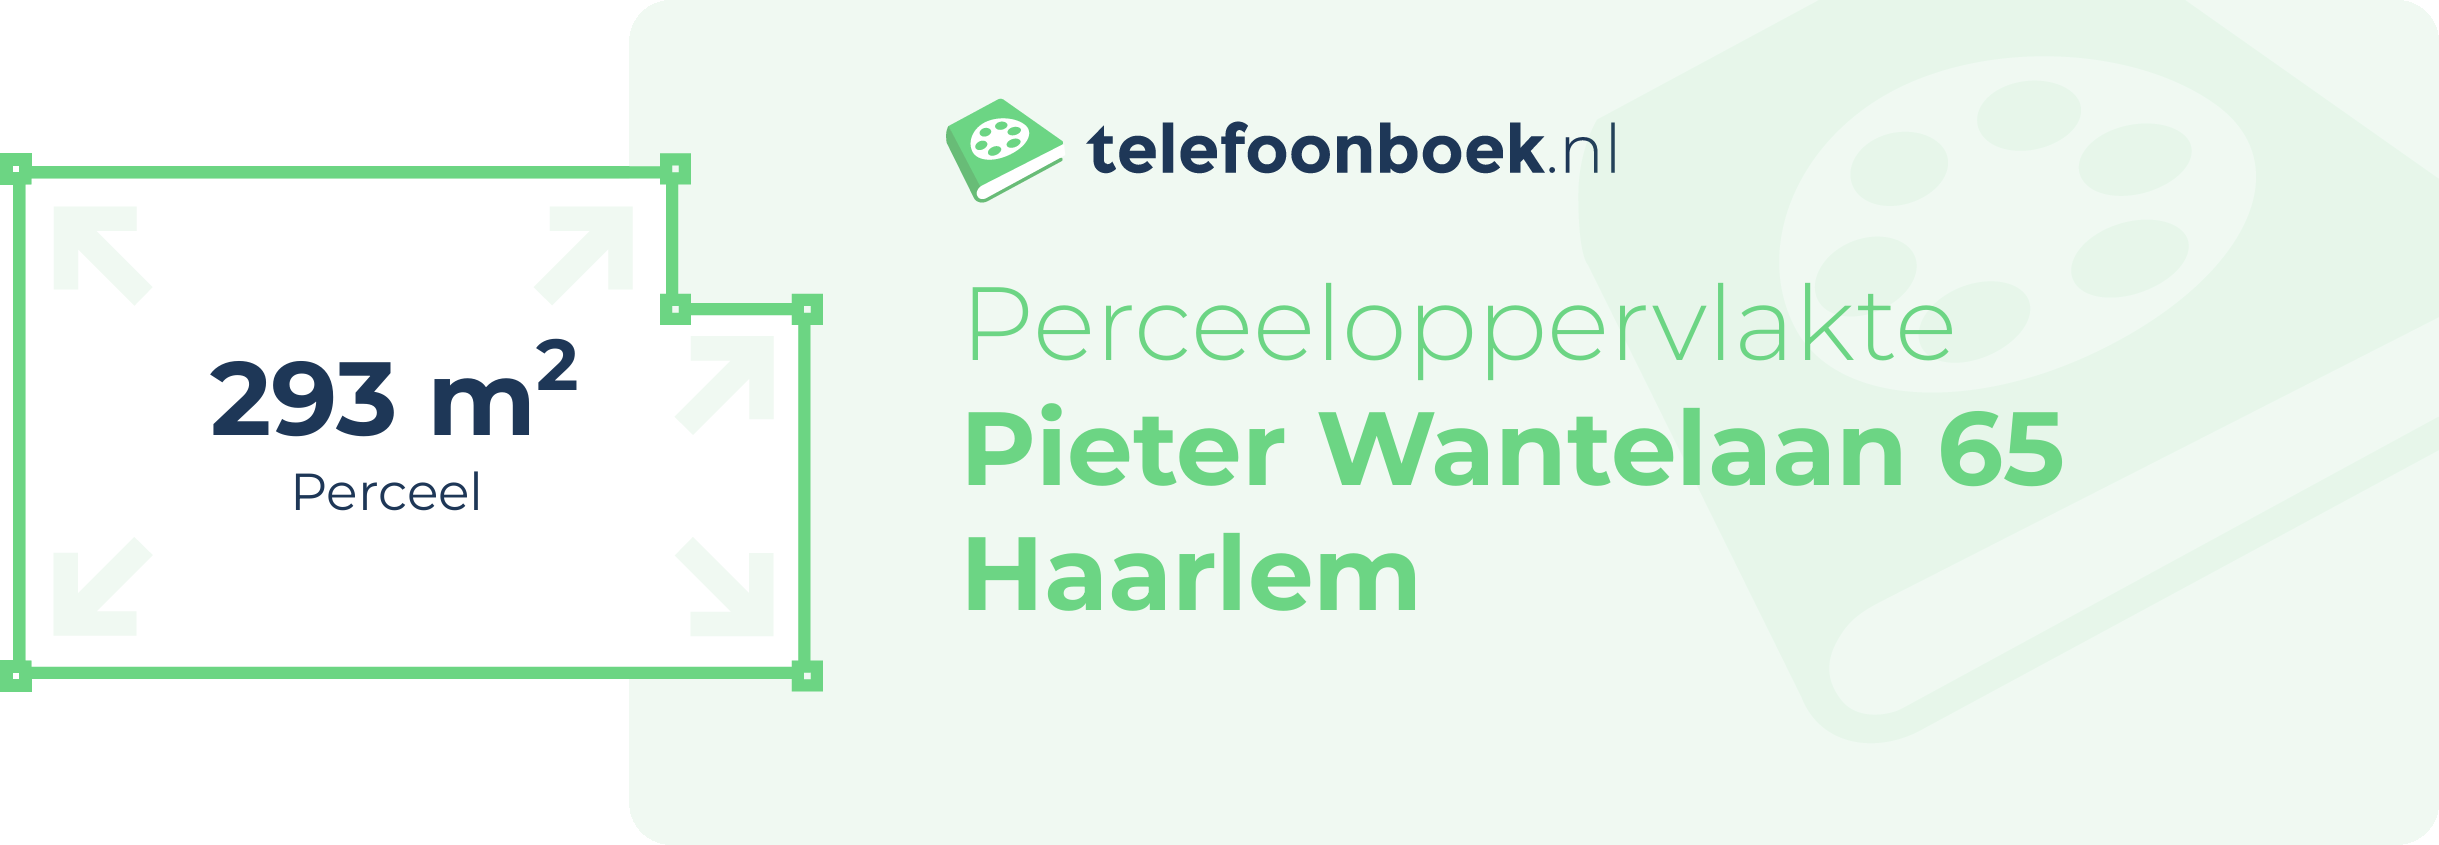 Perceeloppervlakte Pieter Wantelaan 65 Haarlem